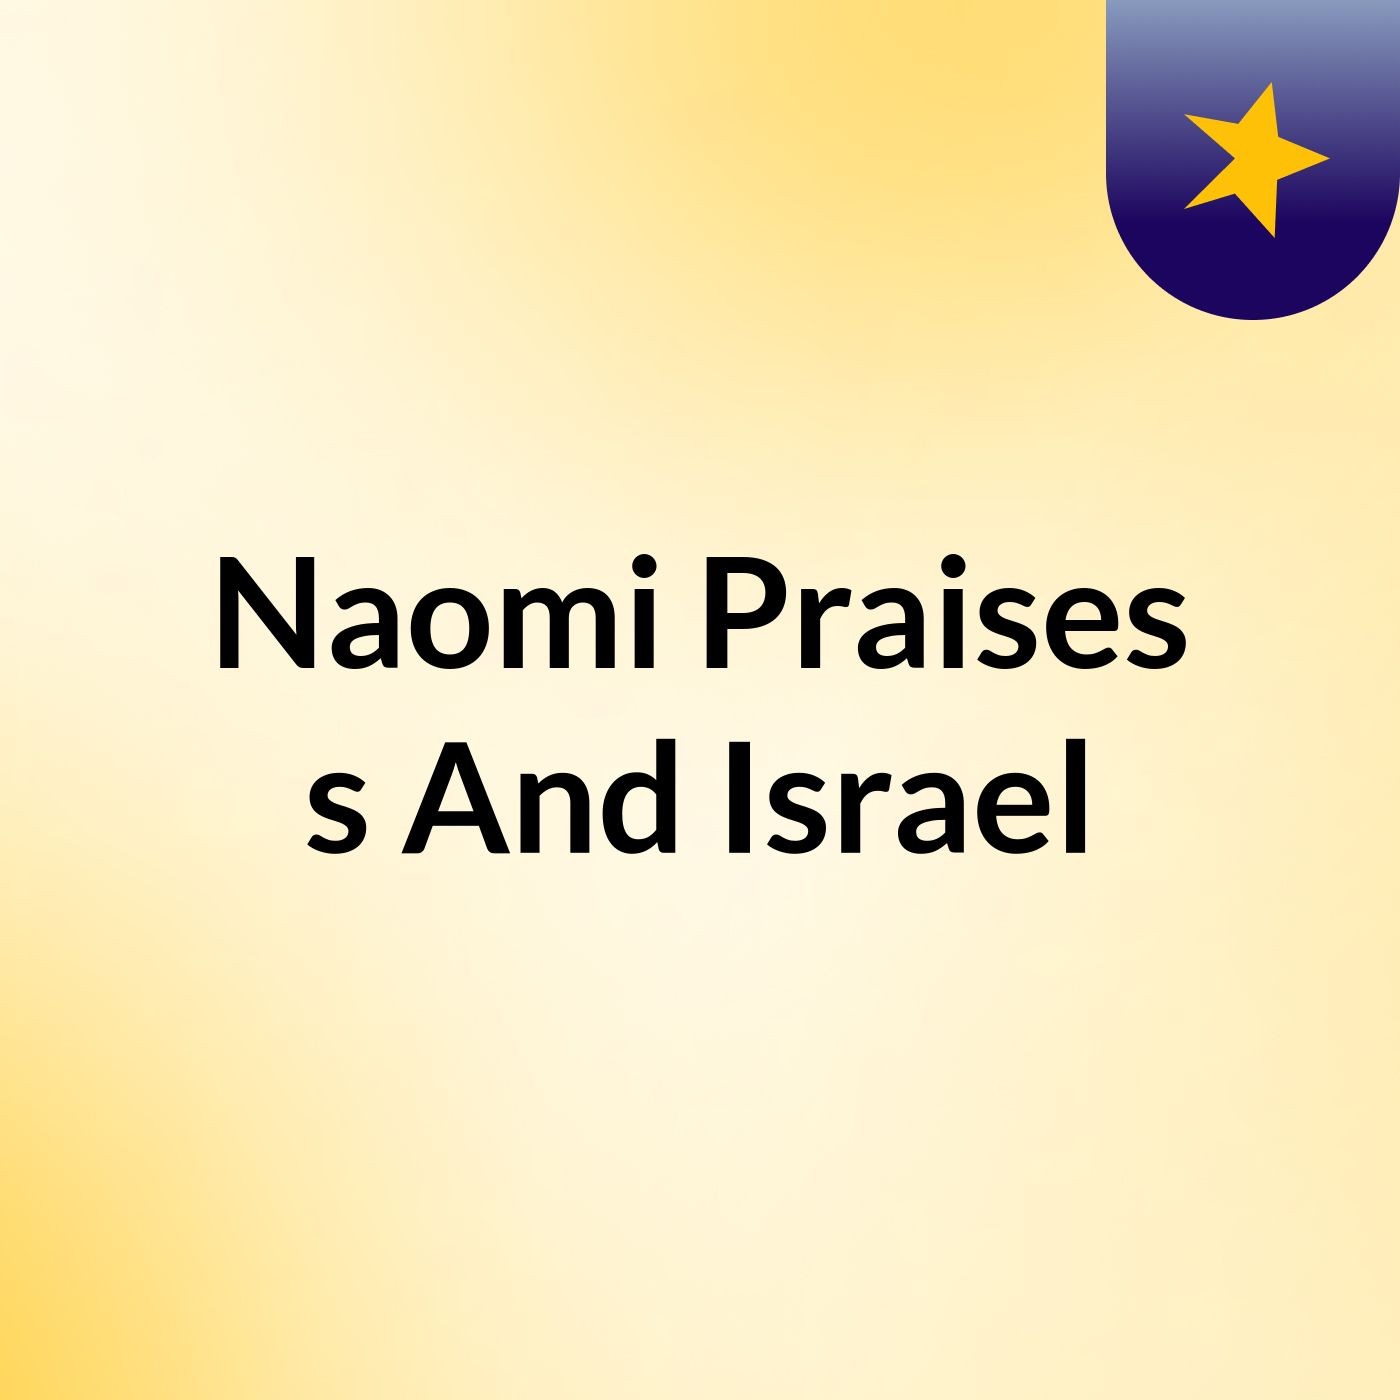 Naomi Praises's And Israel